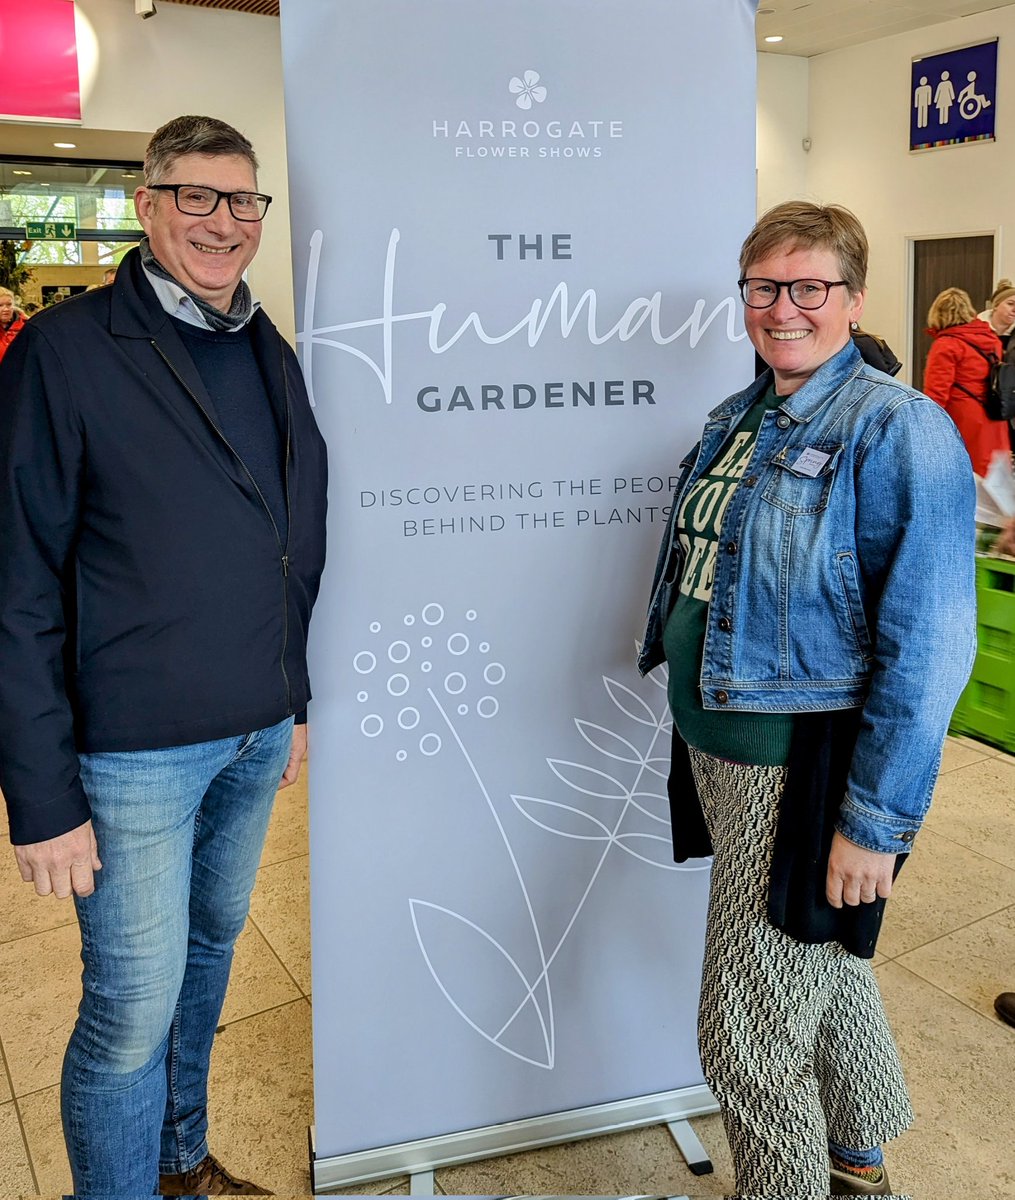 Adrian Stockdale CHort FCIHort author of 'Plant Names Simplified' has been on the @human_gardener stage chatting to Sarah Owen-Hughes MCIHort @HarrogateFlower